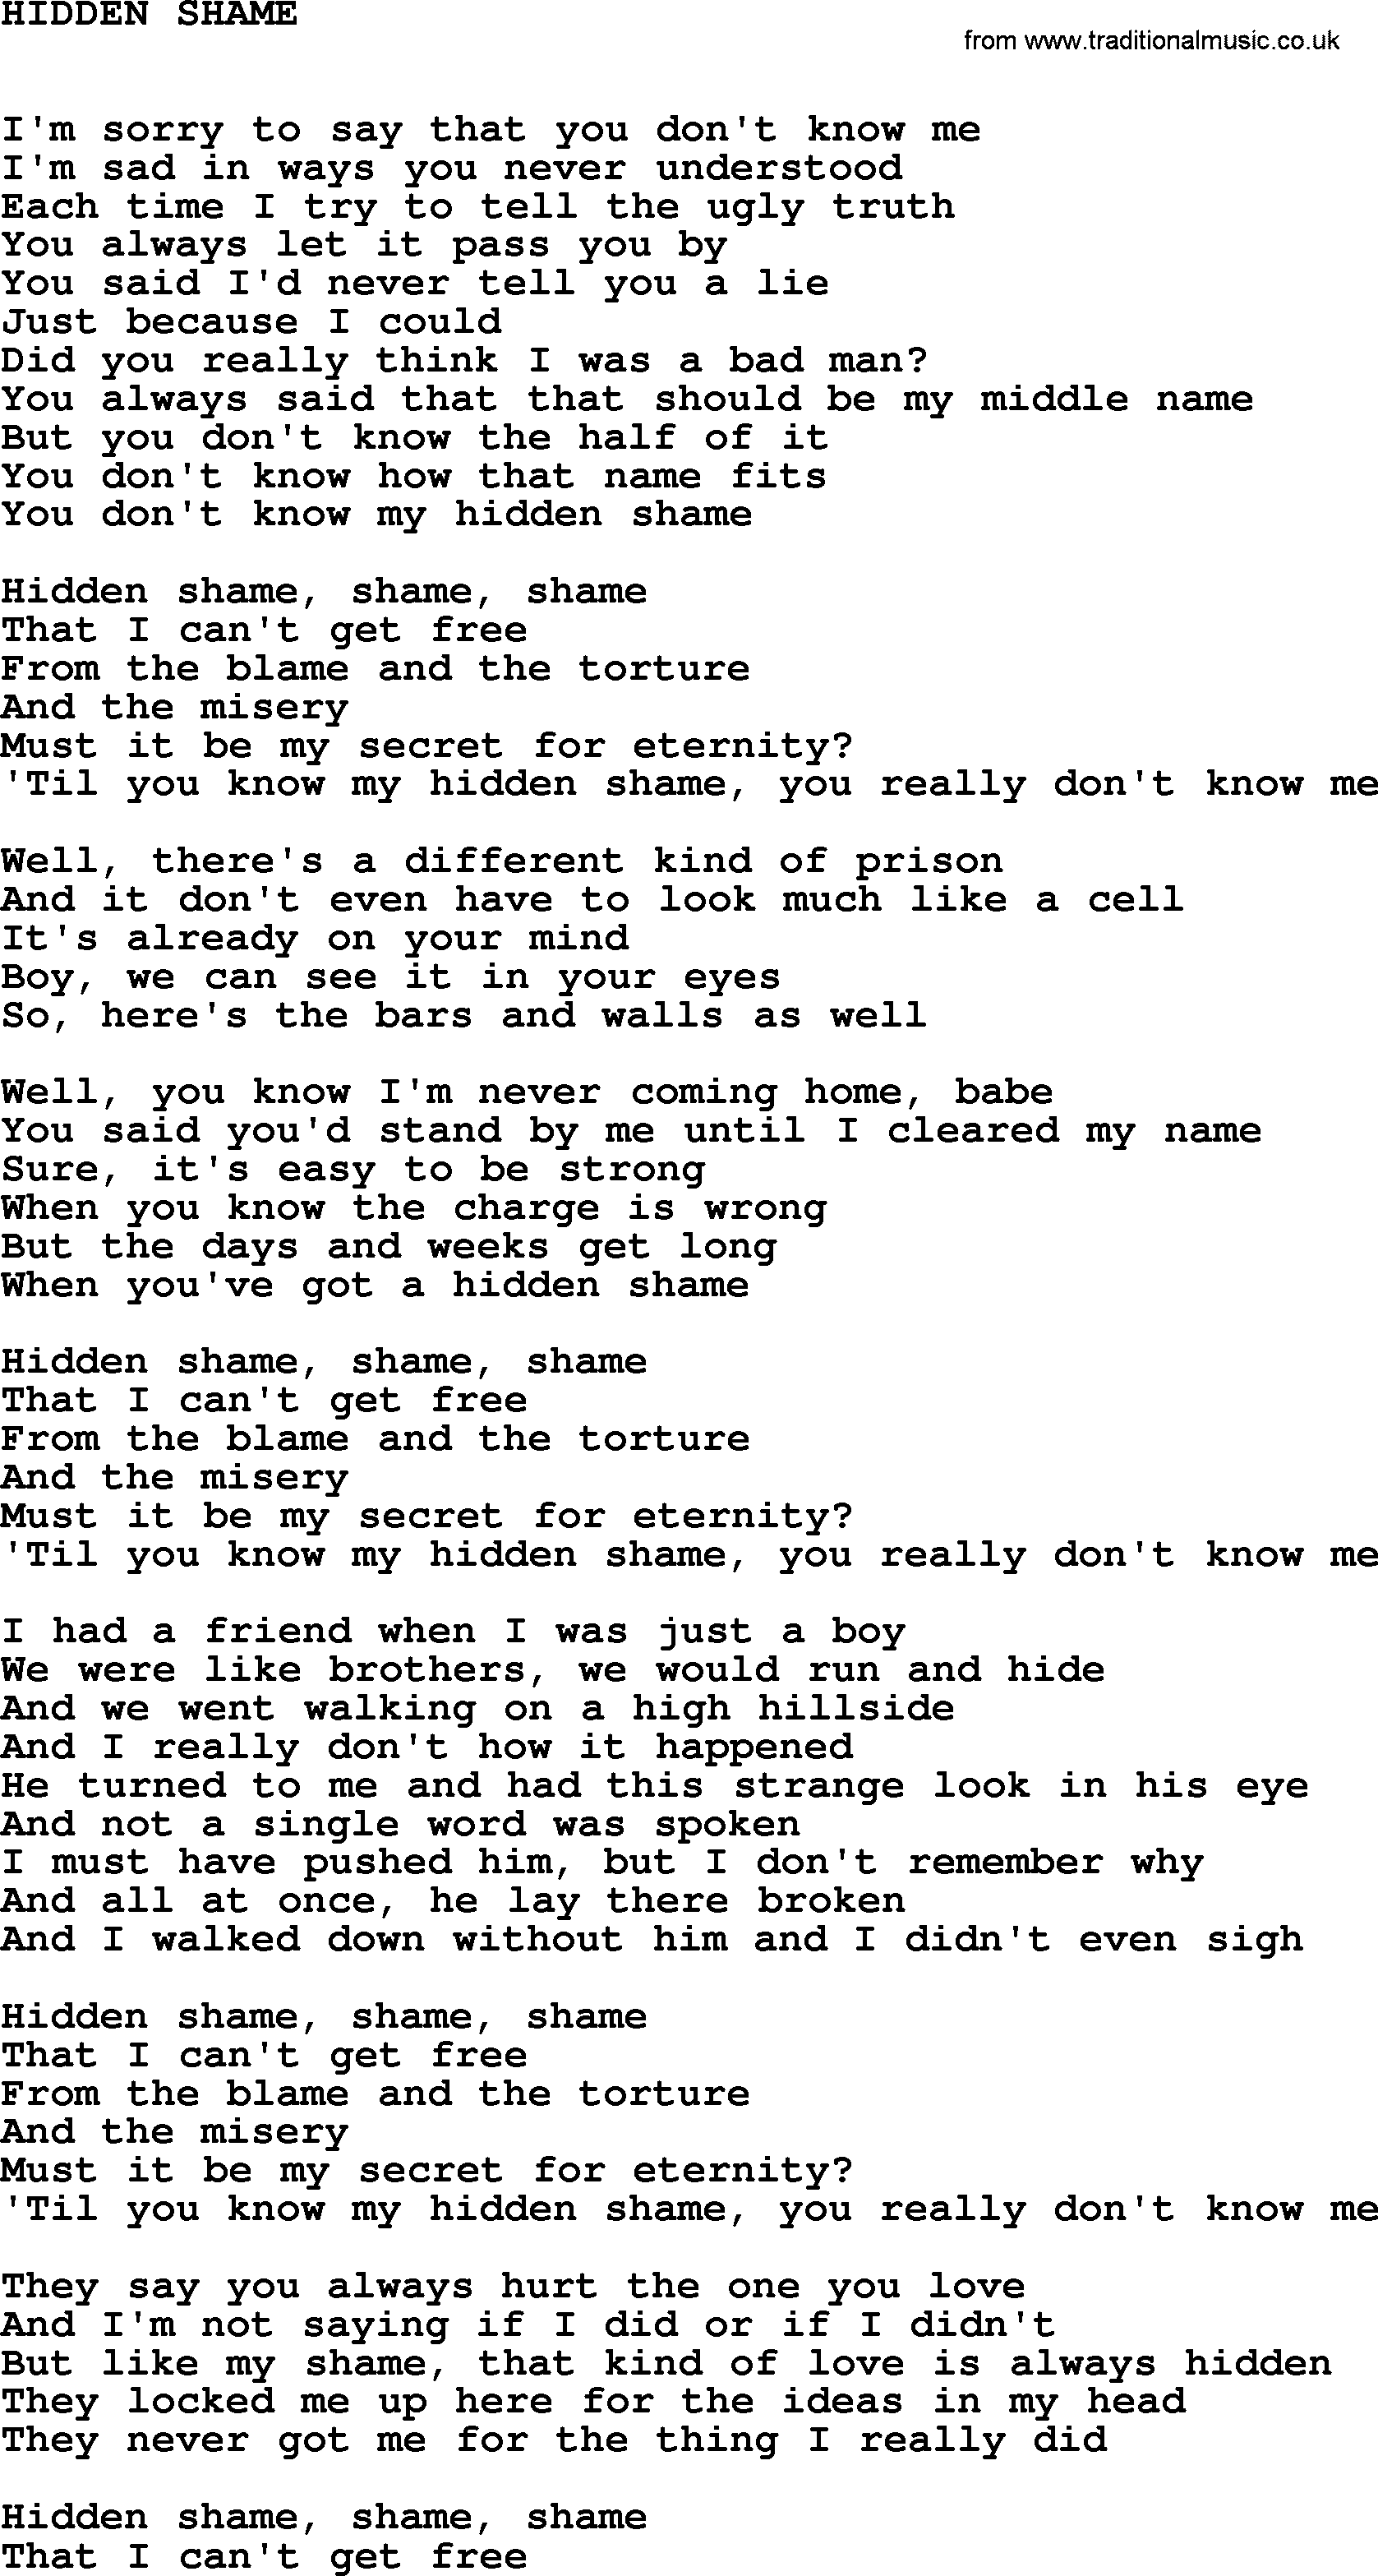 Johnny Cash song Hidden Shame.txt lyrics